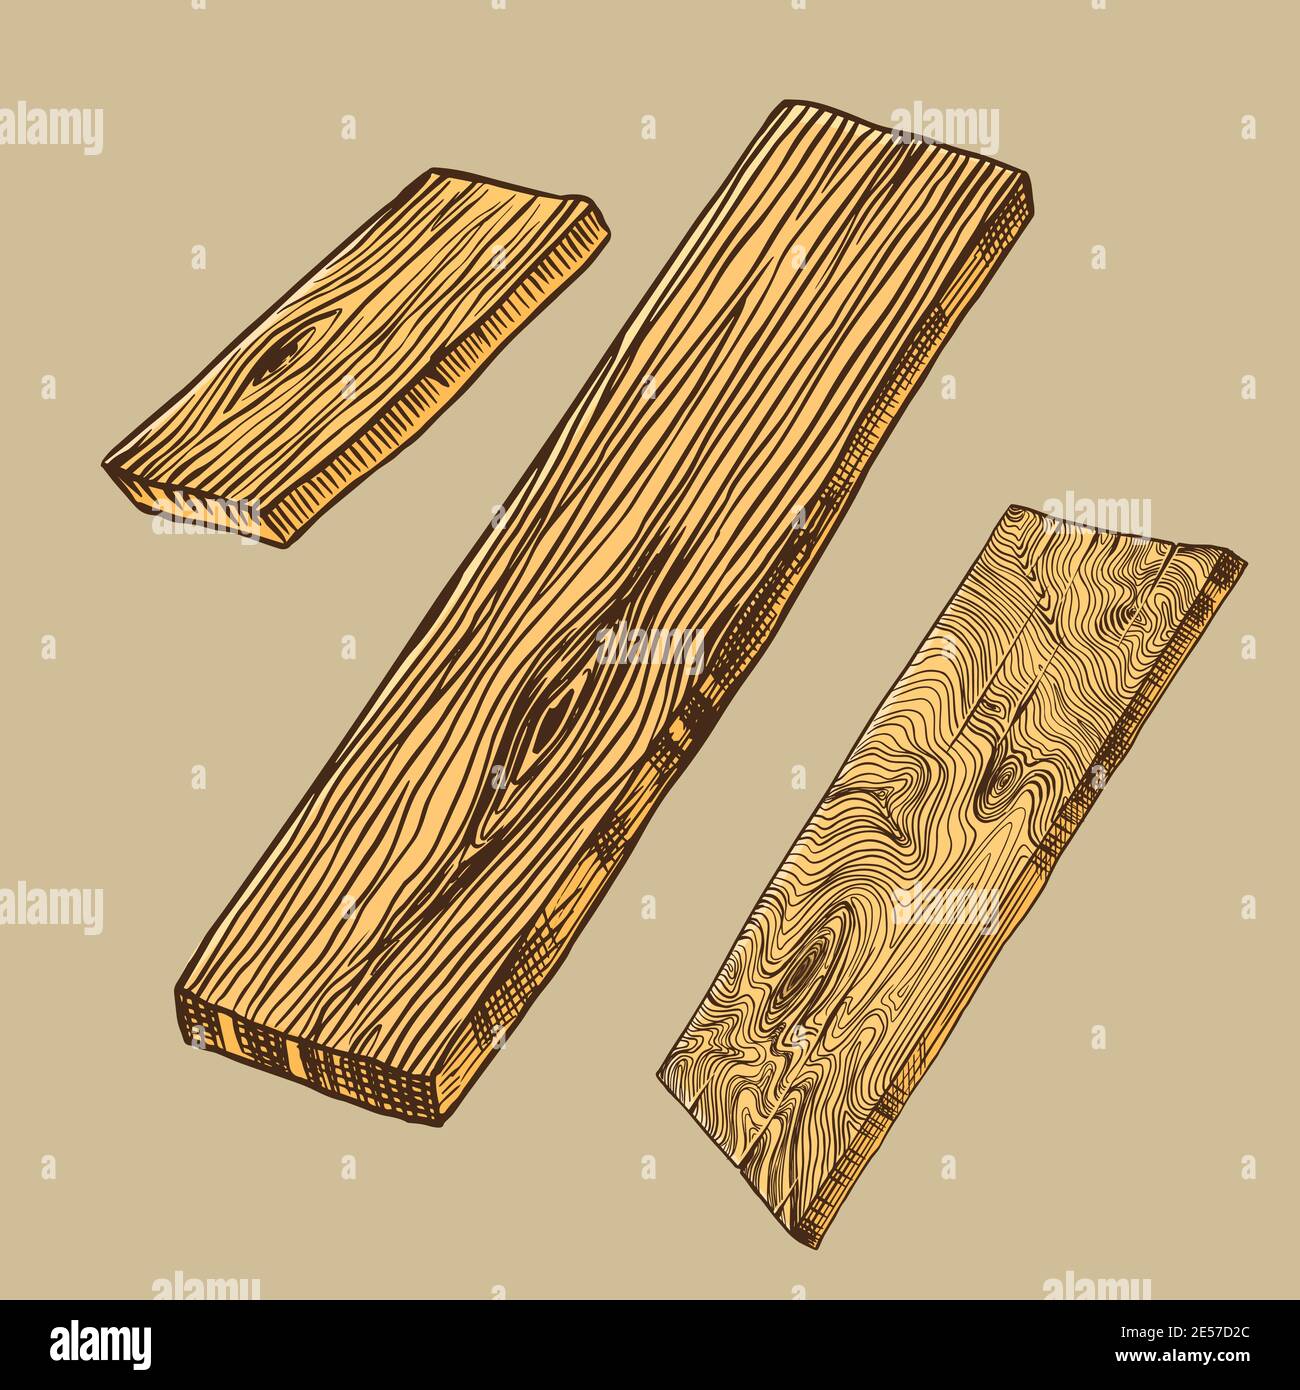 9397 Wood Plank Sketch Images Stock Photos  Vectors  Shutterstock